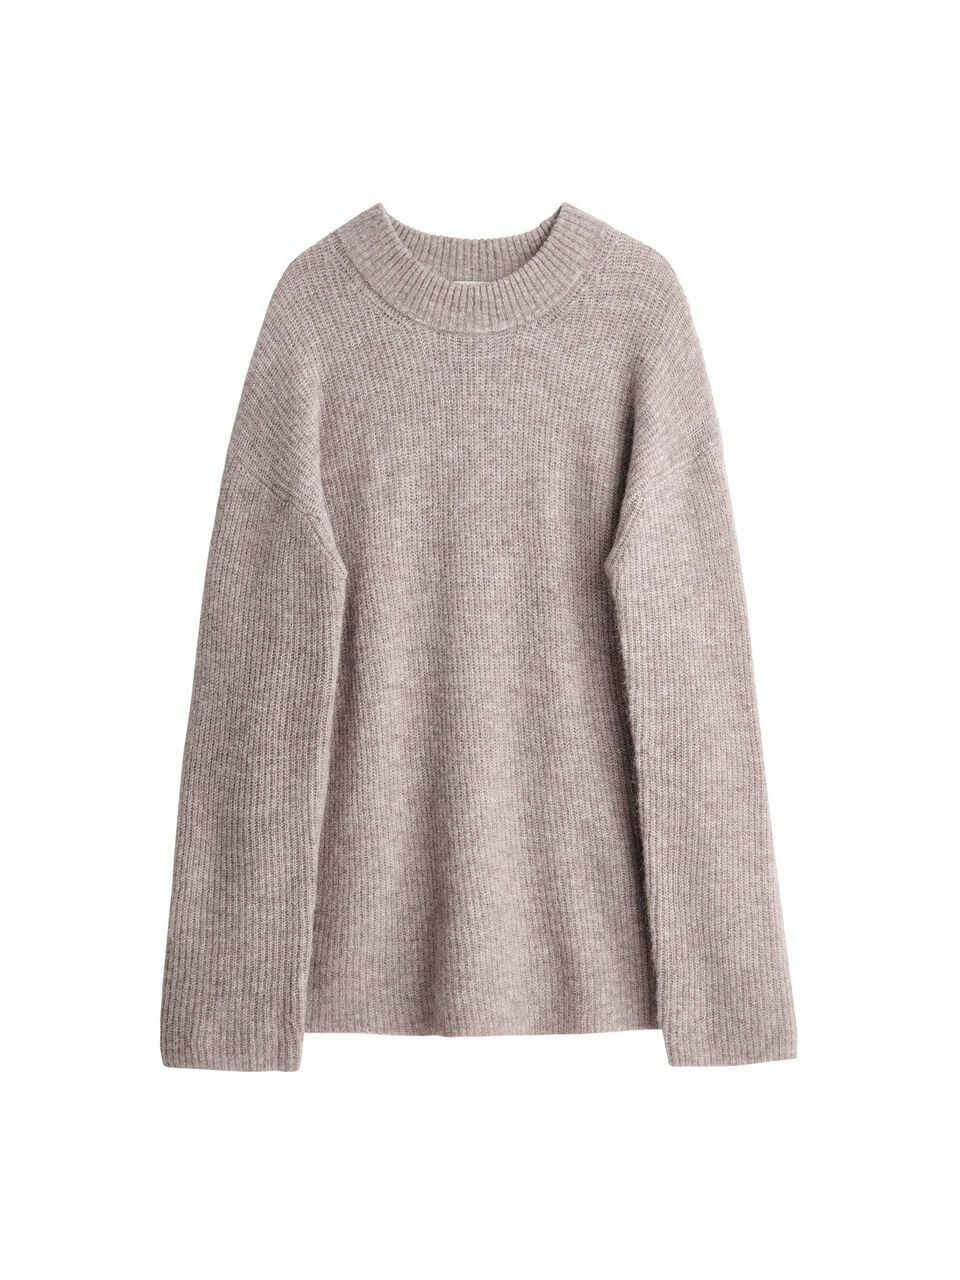 By Malene Birger Sweater Cirla online kopen bij Boutique Domburg 